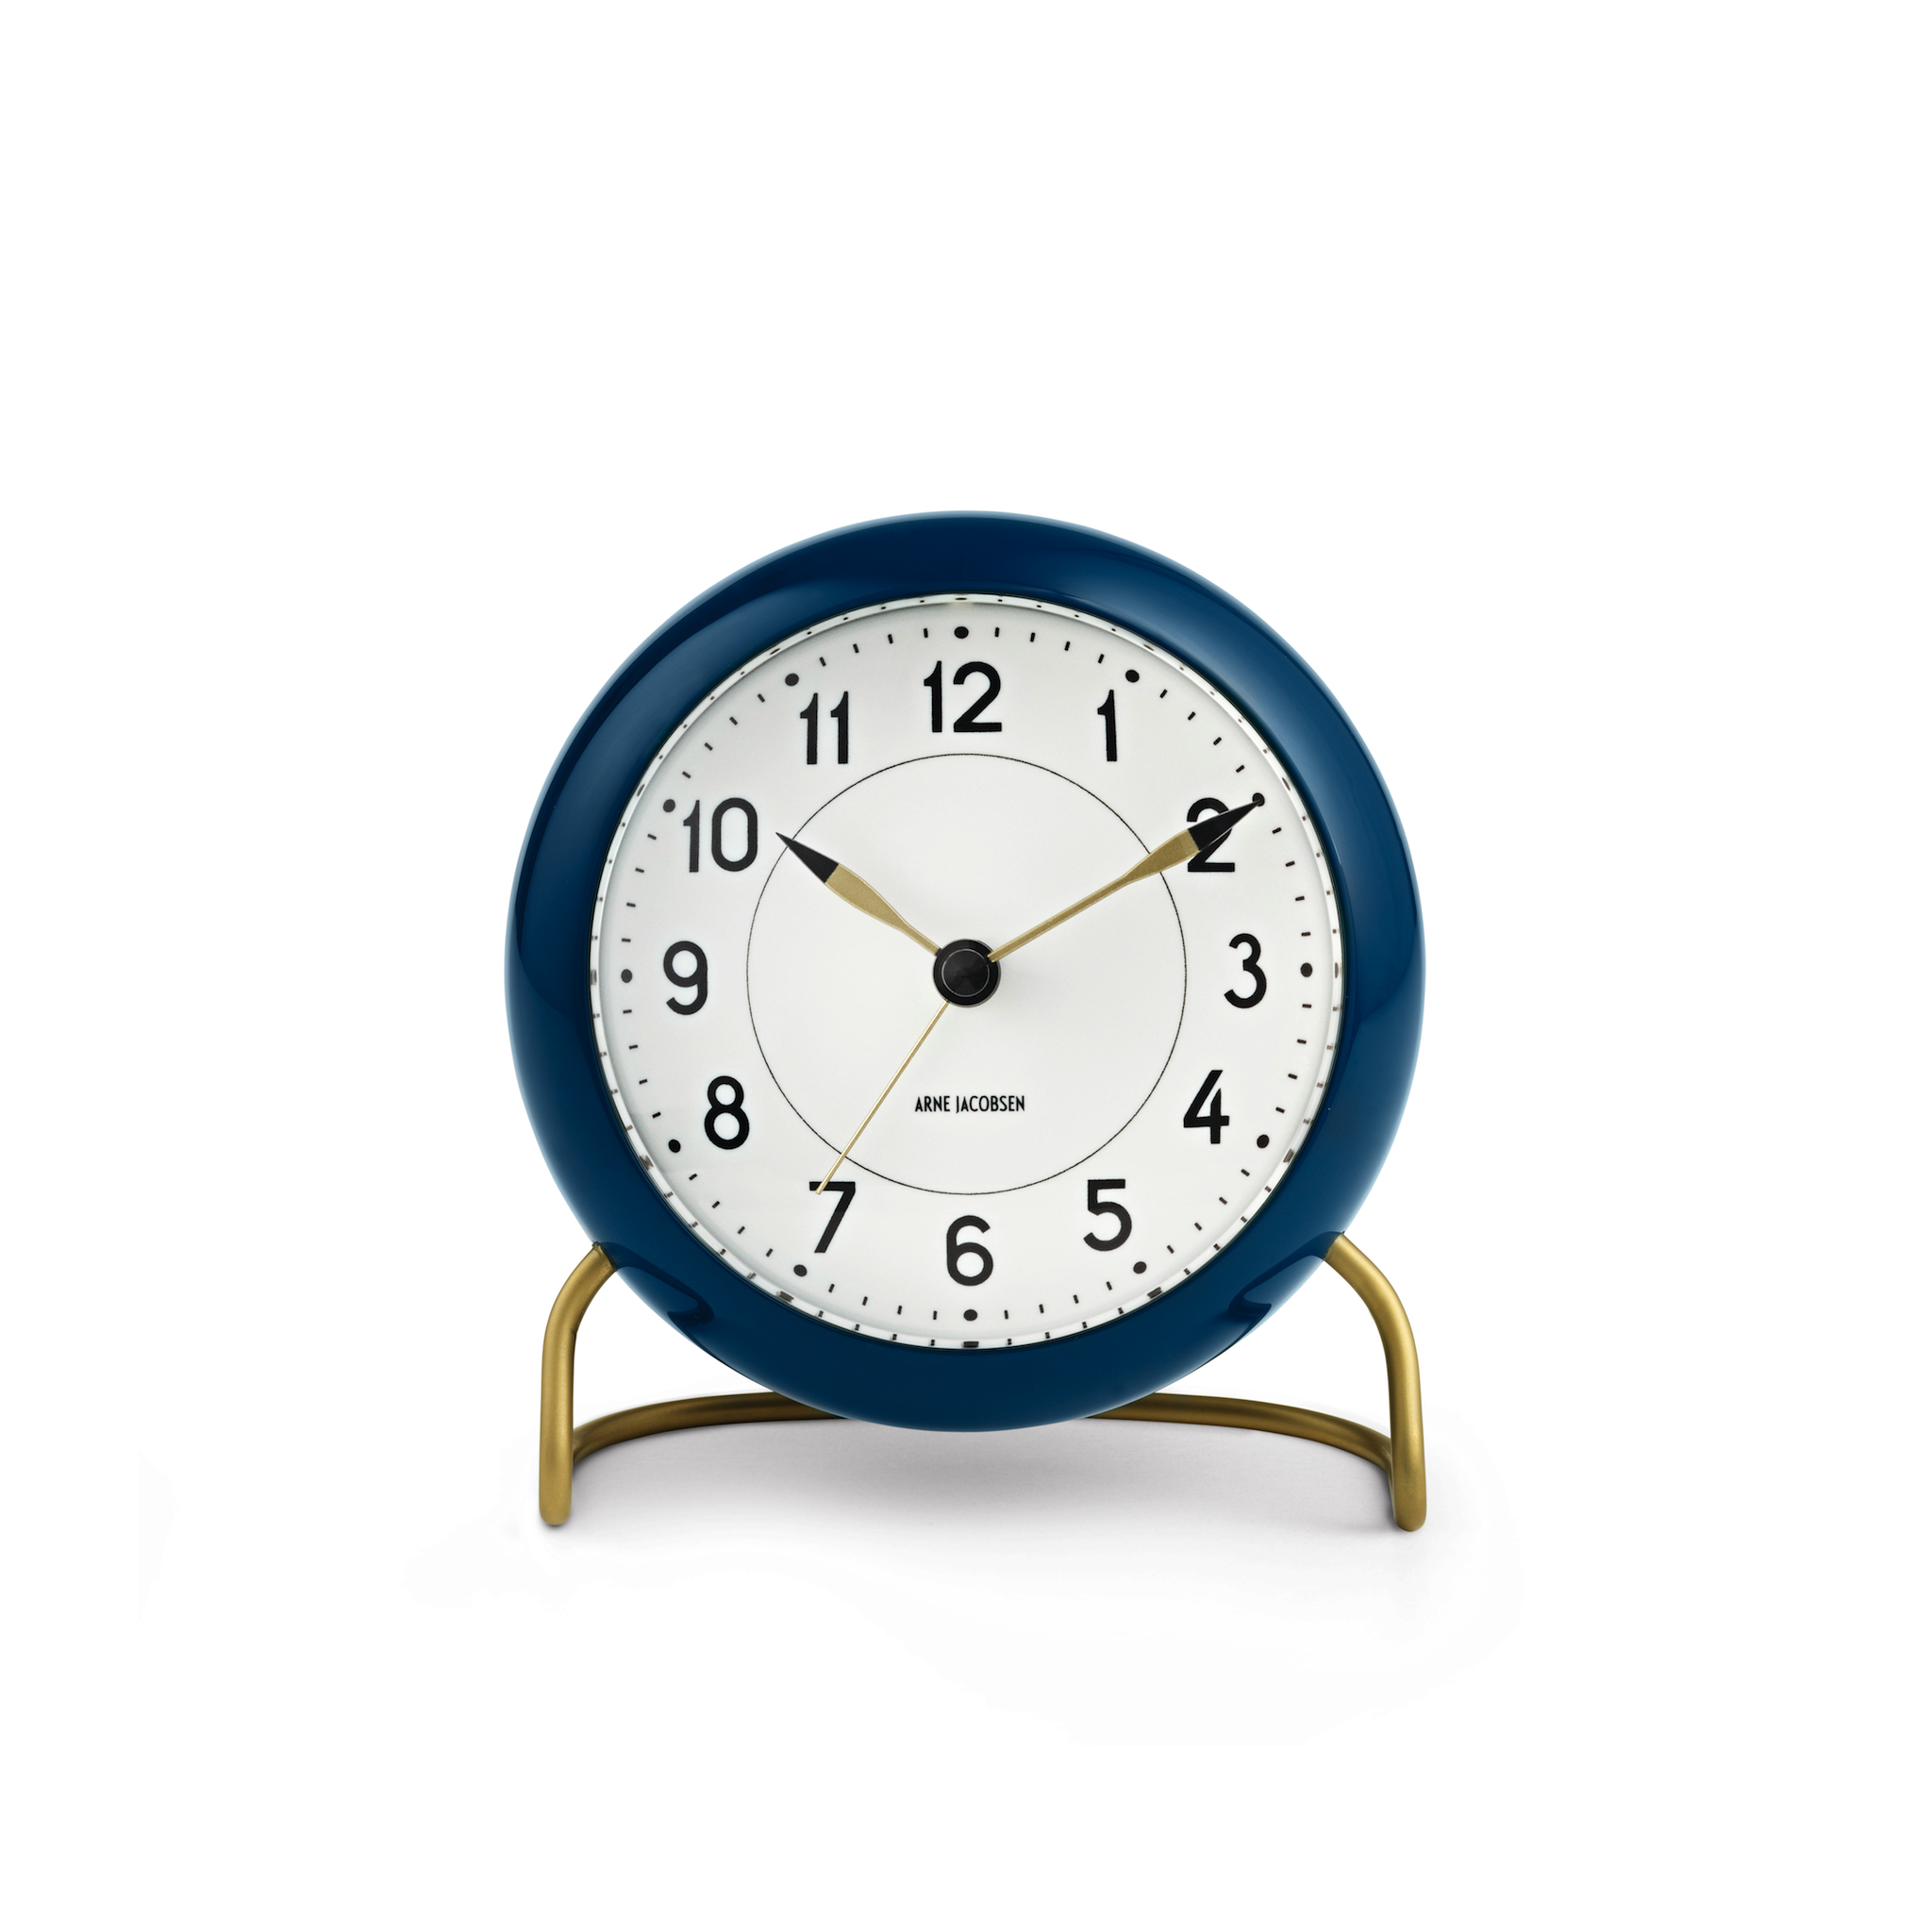 Arne Jacobsen Station Alarm Clock, Blue